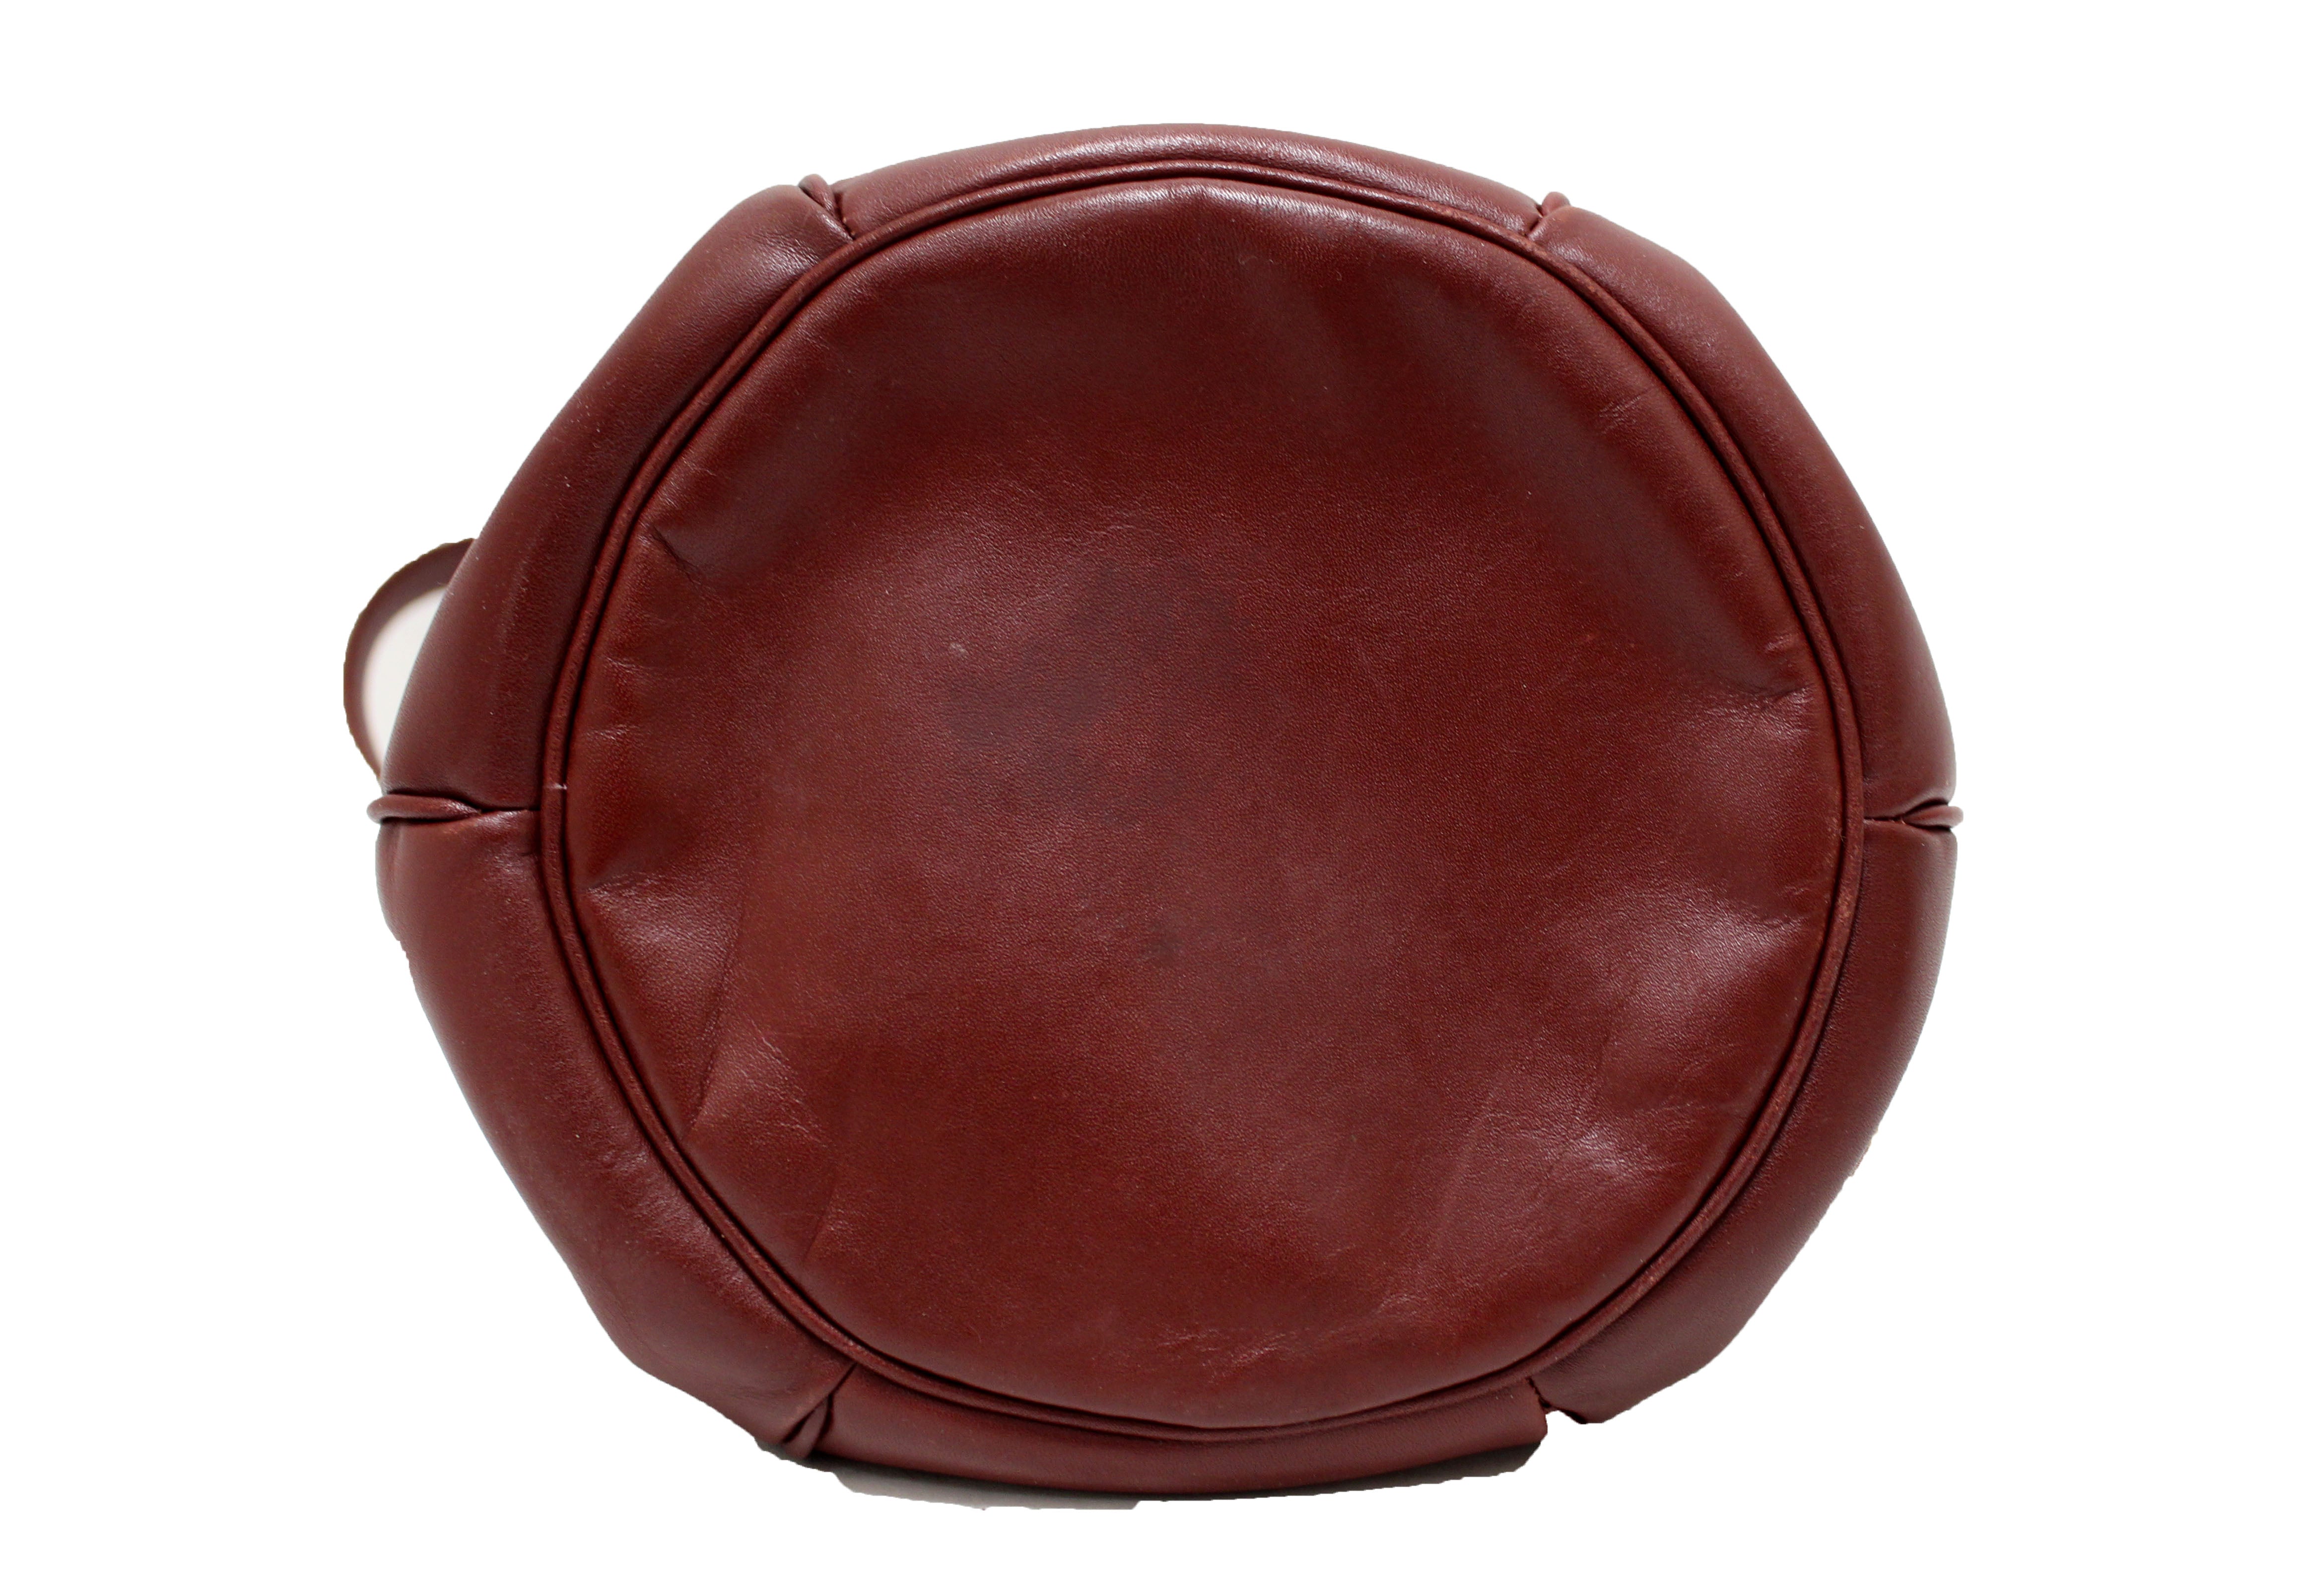 Authentic Cartier Burgandy Bordeaux Leather Drawstring Mustline Bucket